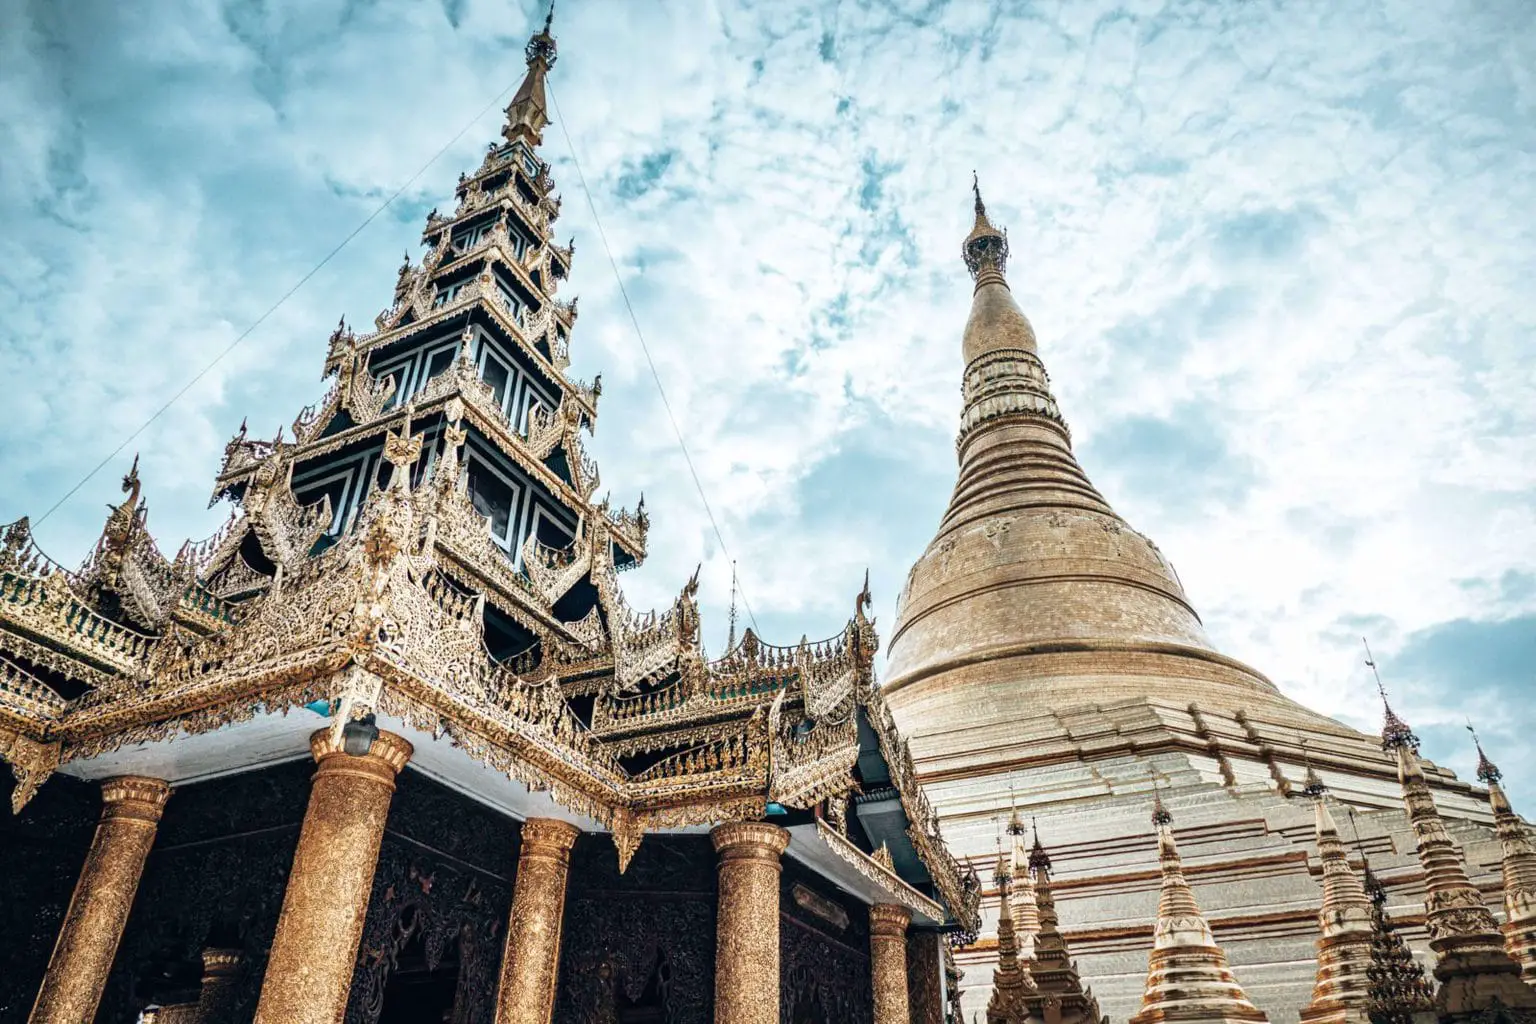 Picture of the Schwedagon Pagoda in Yangon Myanmar